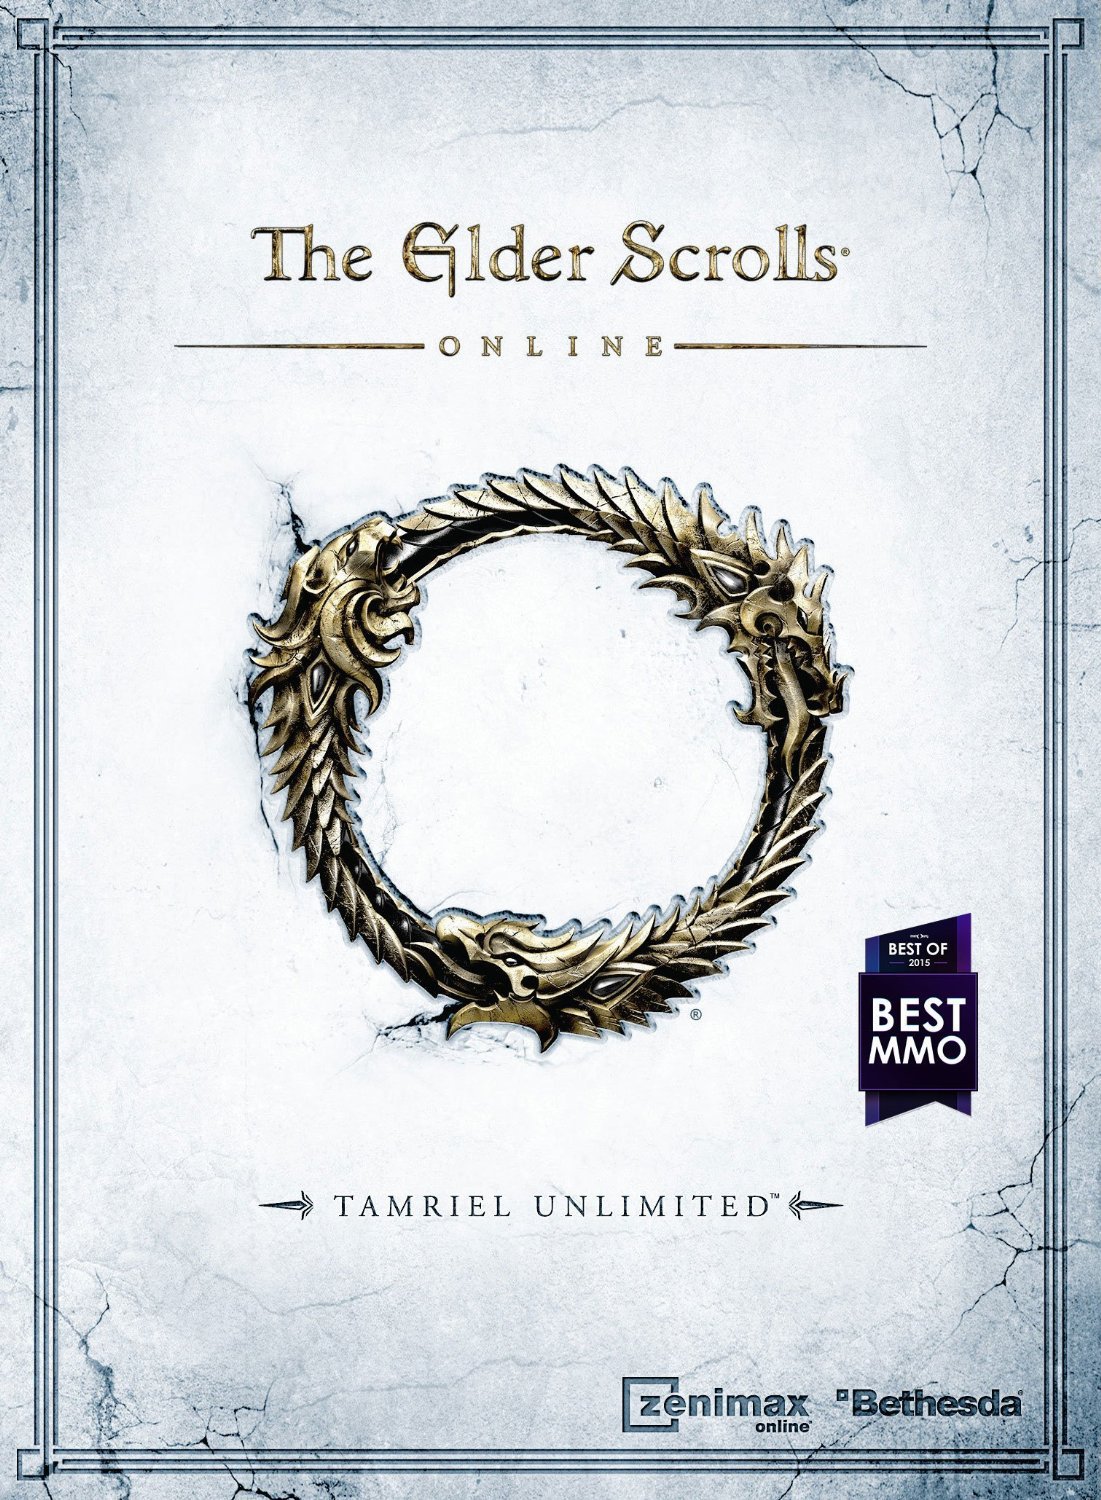 instal the last version for windows The Elder Scrolls Online